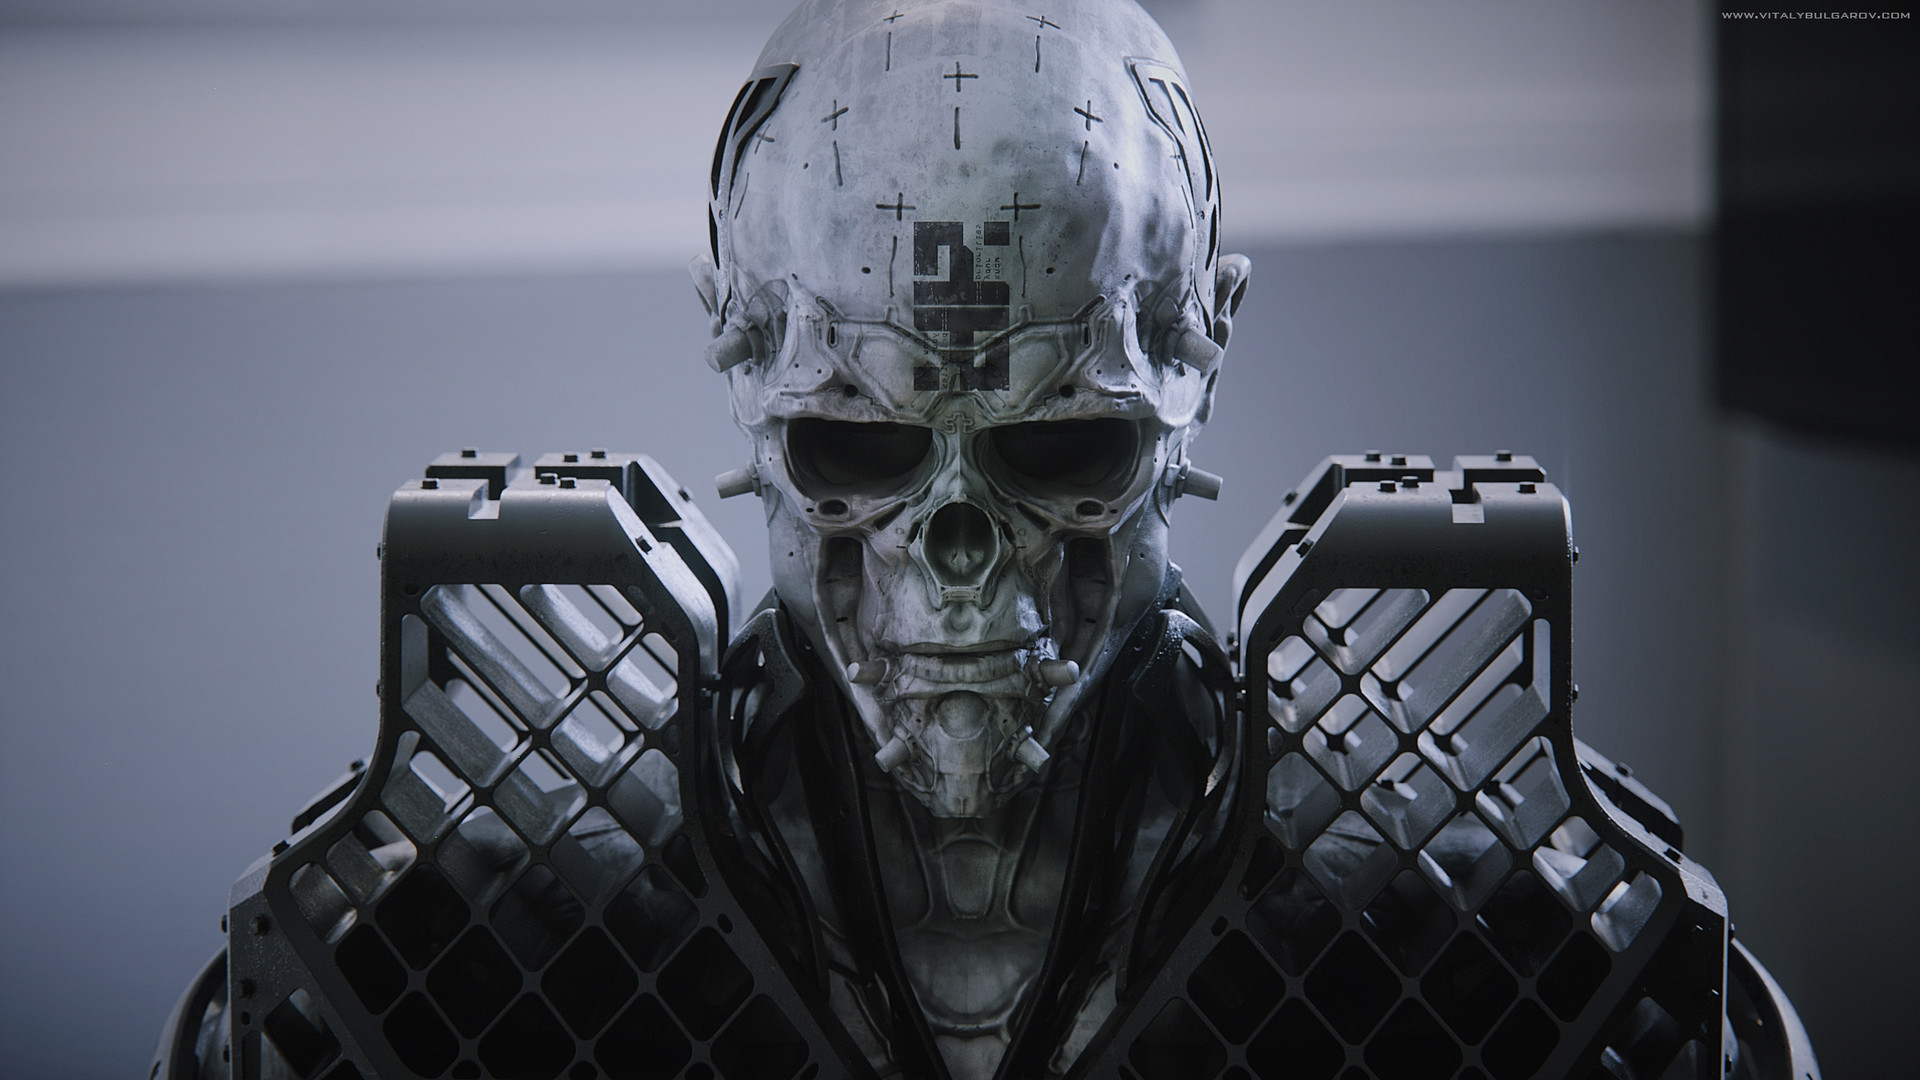 General 1920x1080 skull armor robot futuristic frontal view